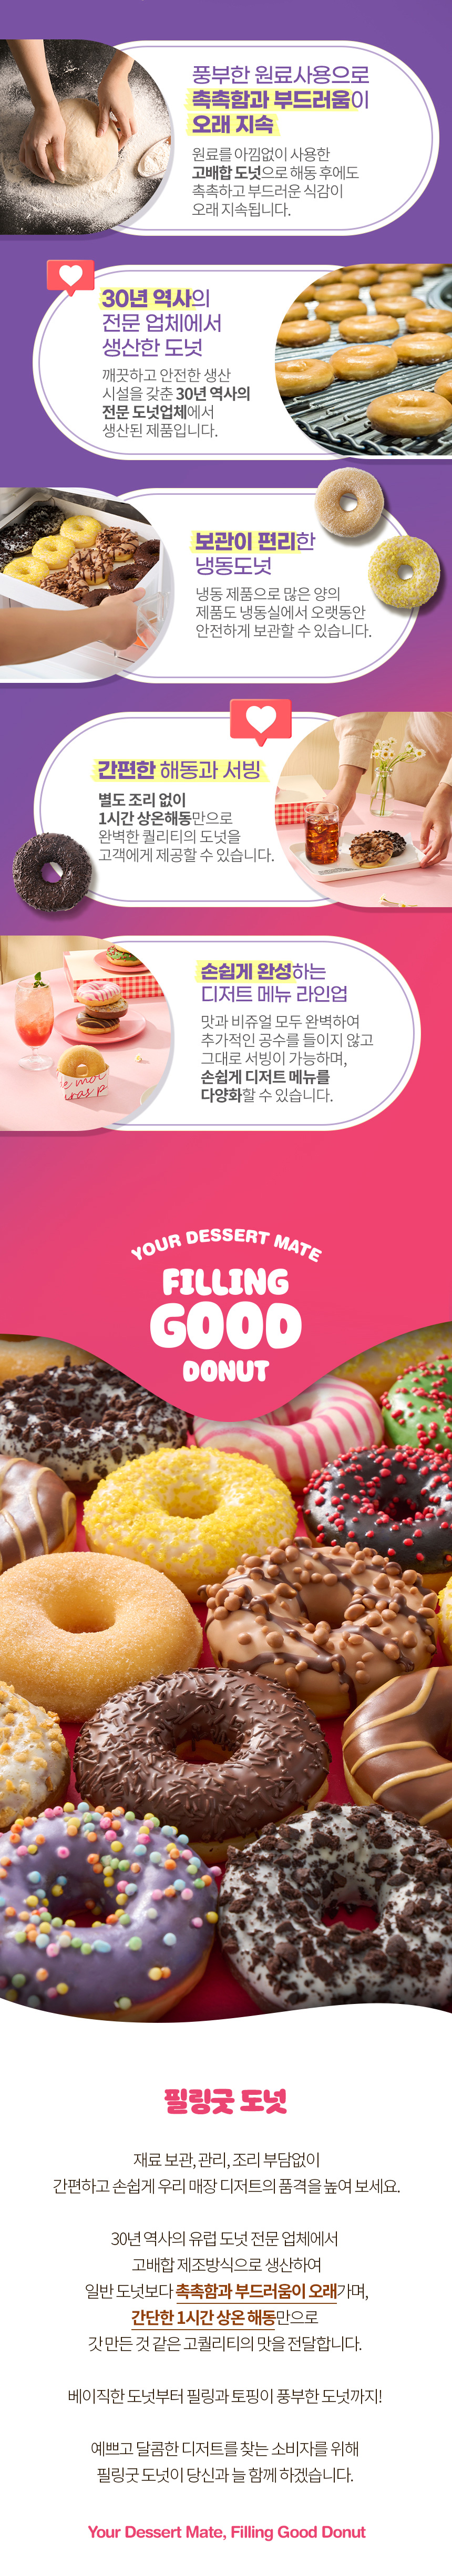 Filing_Good_Donut_Sugar_02